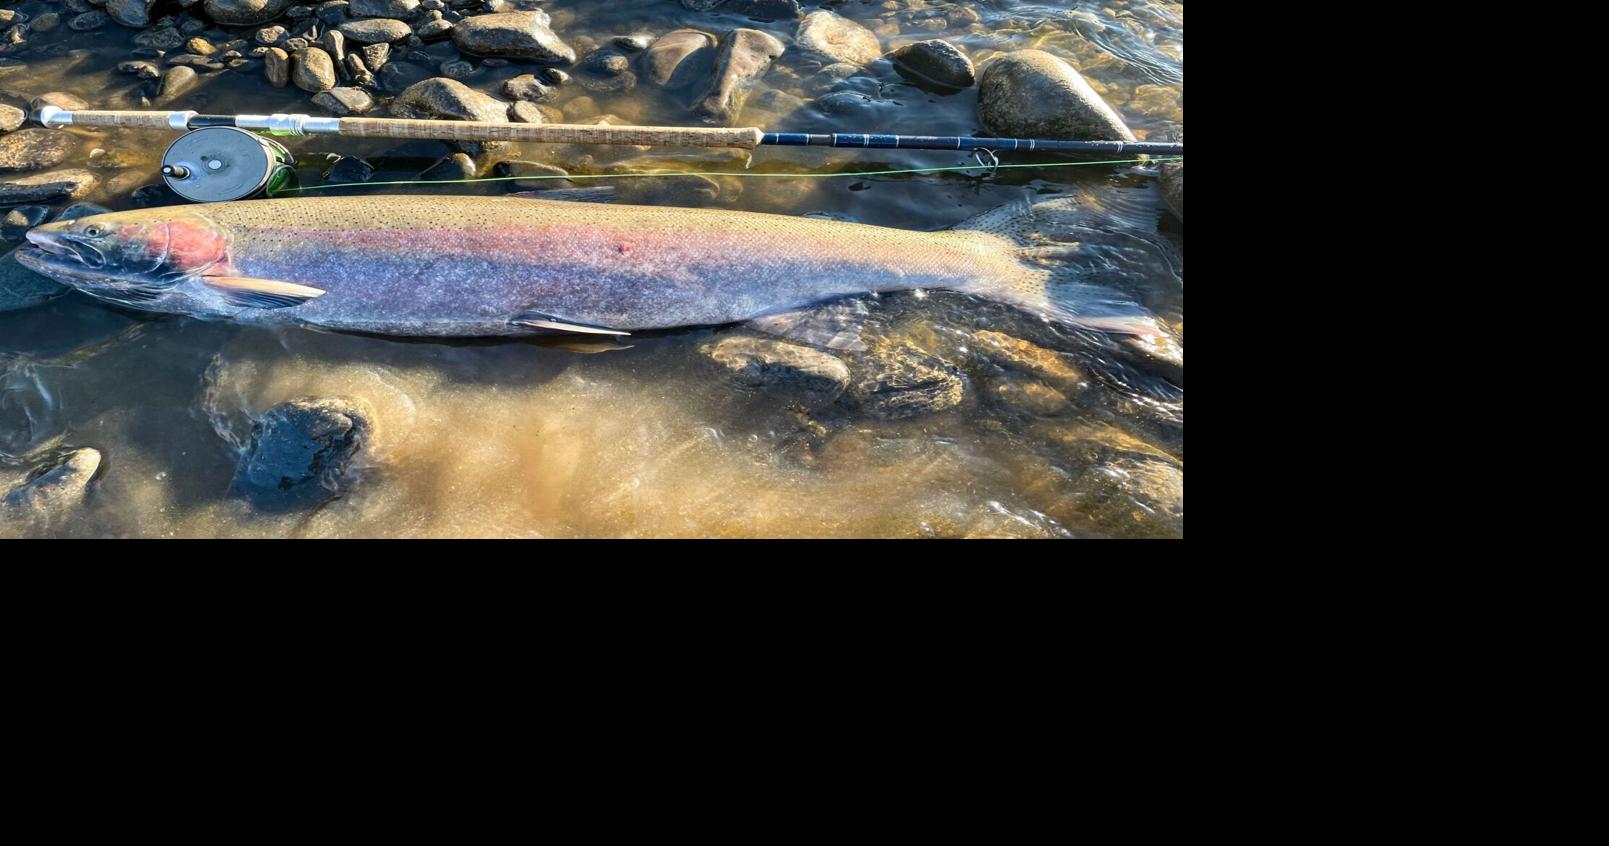 Idaho record-setting steelhead a 'fish of a lifetime